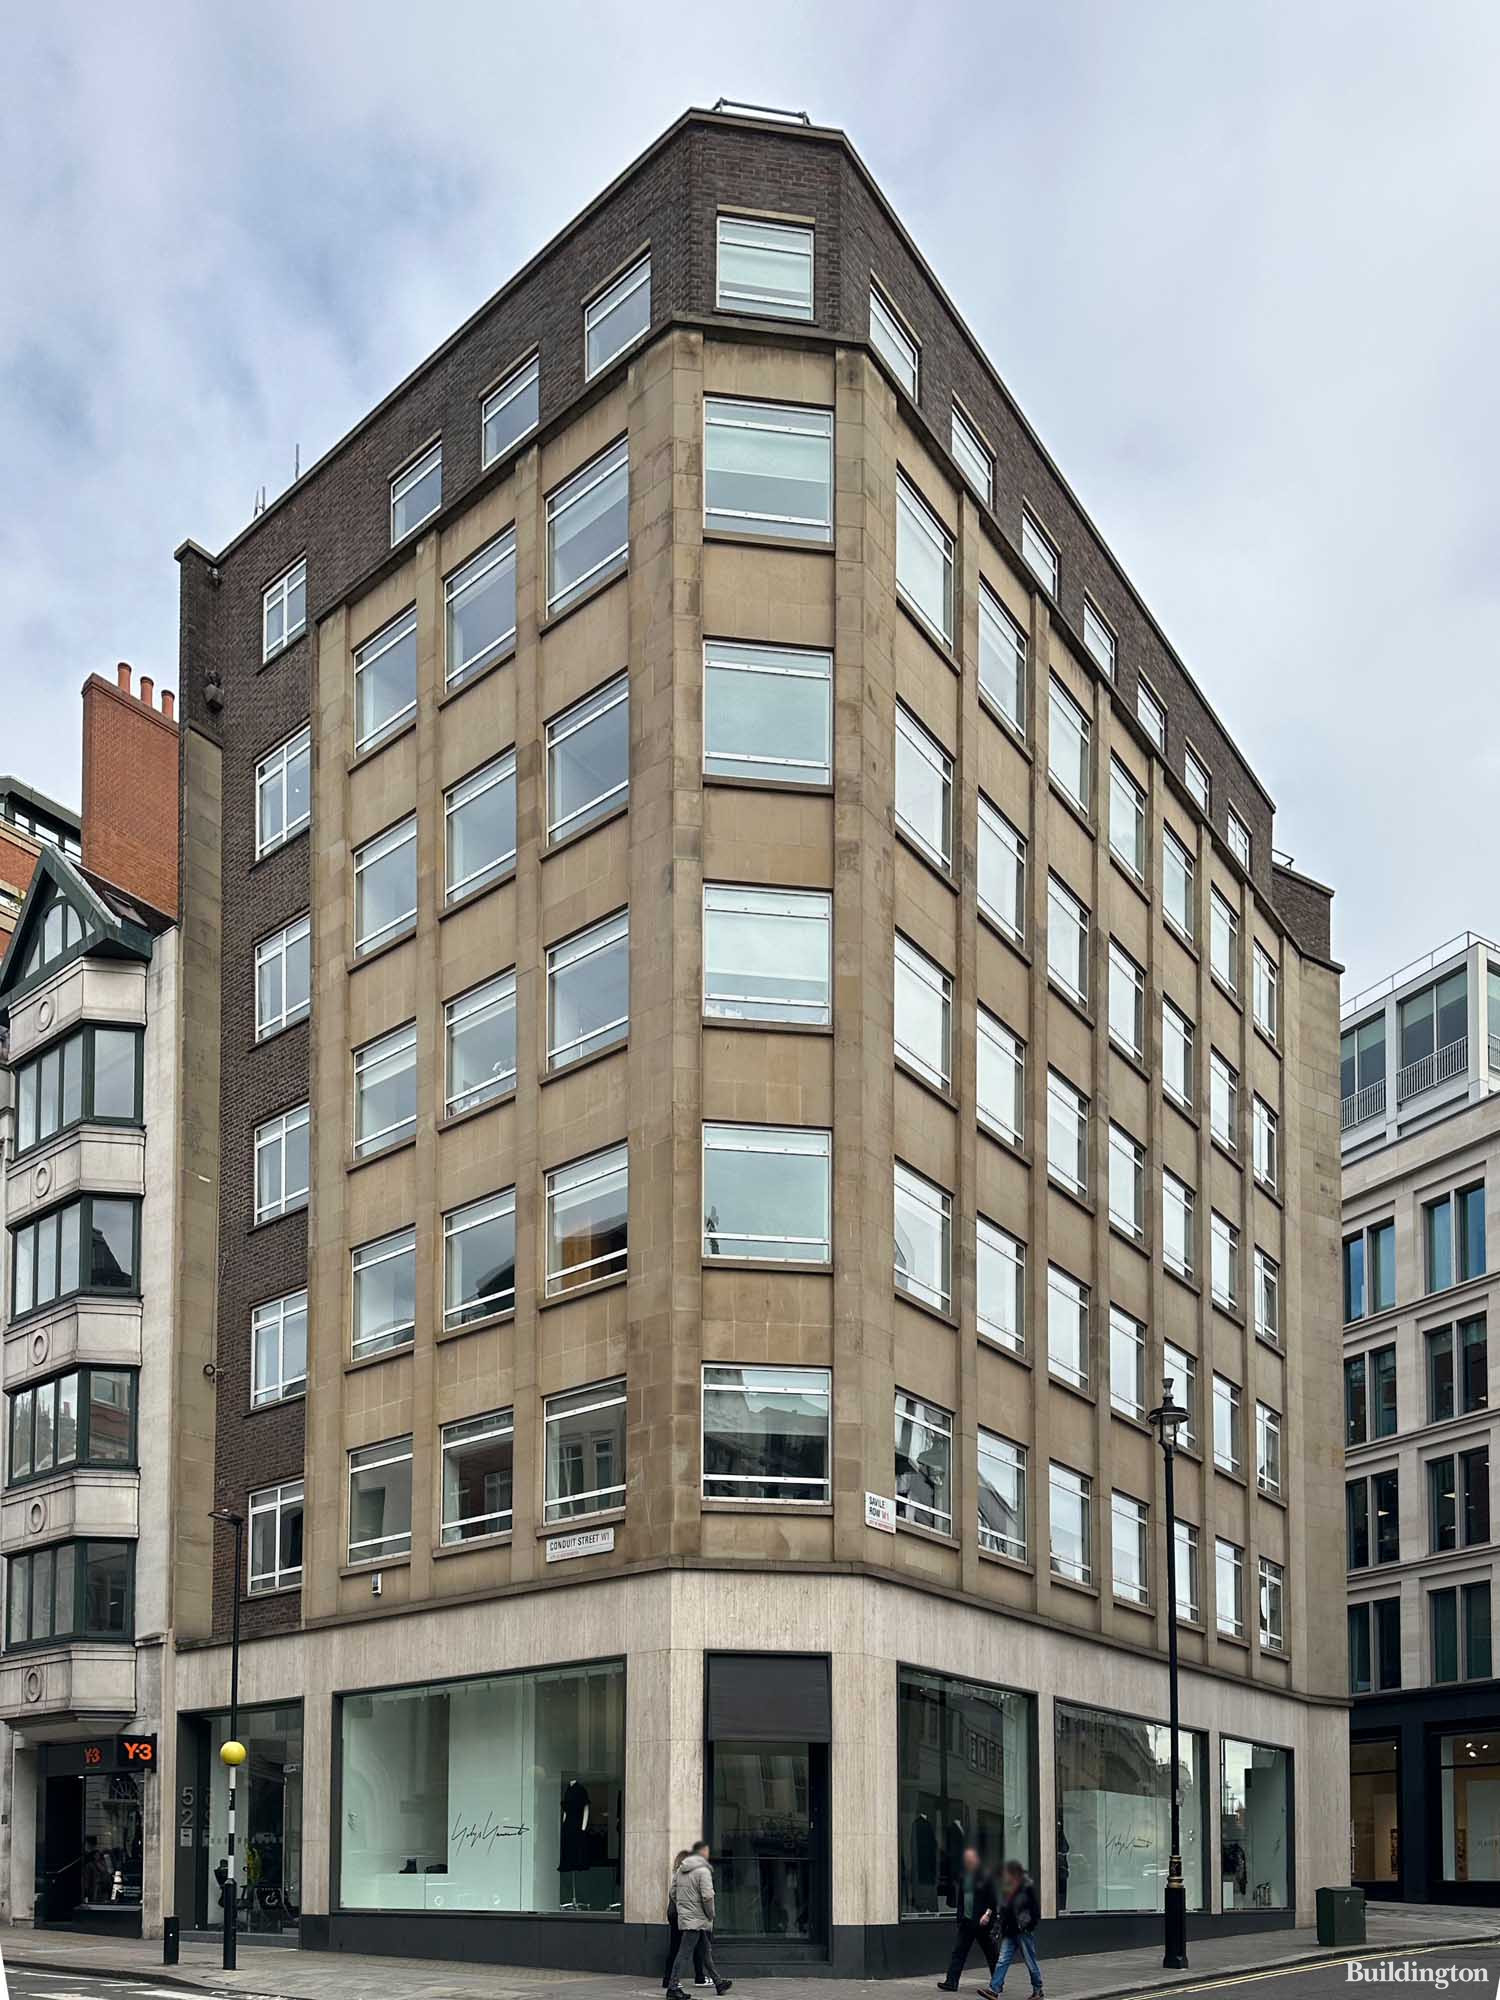 52 Conduit Street and Savile Row corner building in Mayfair, London W1